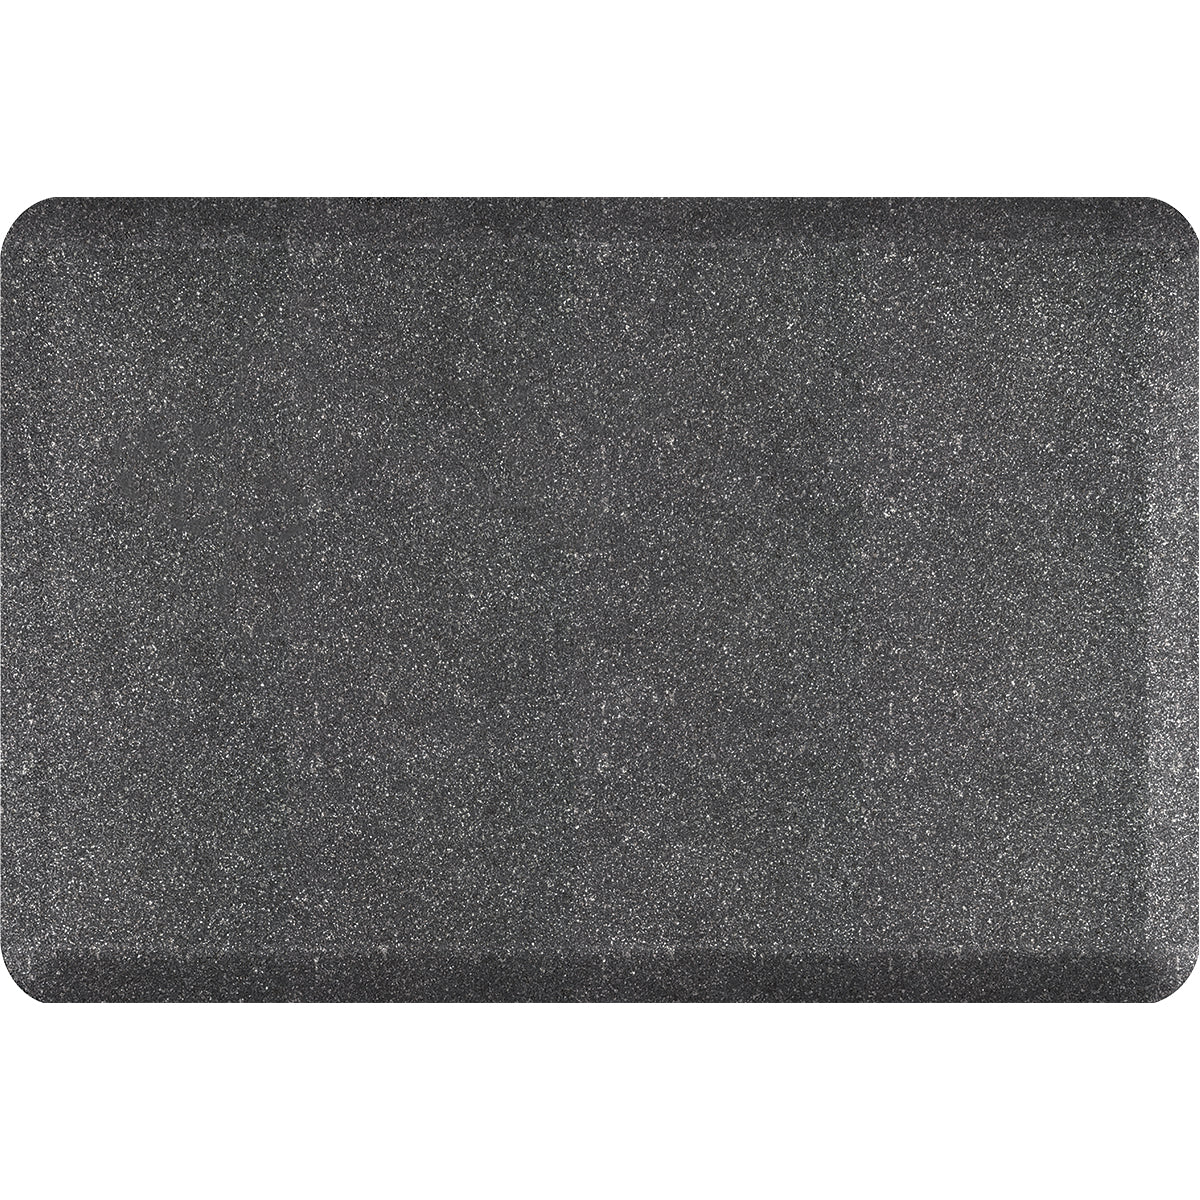 Buy granite-steel WellnessMats Granite Collection